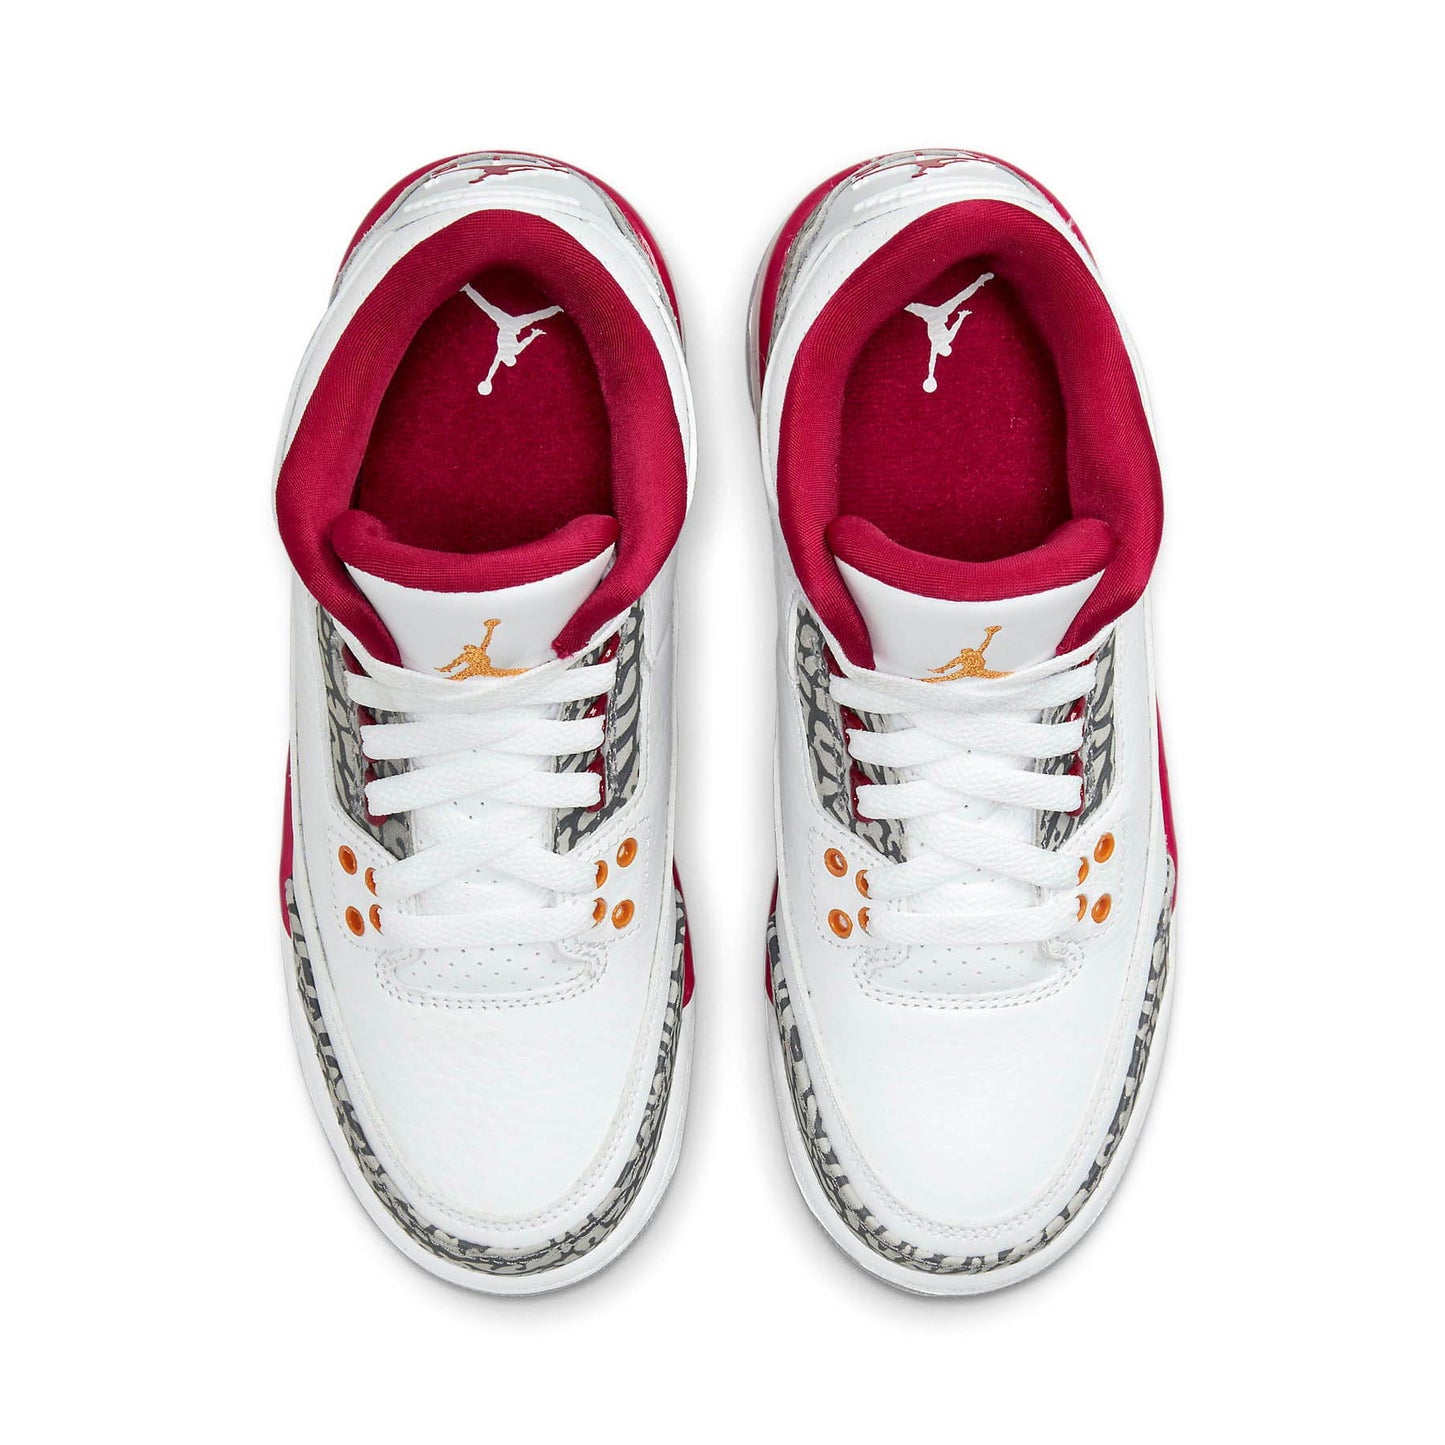 Air Jordan 3 Retro Gs 'Cardinal Red'